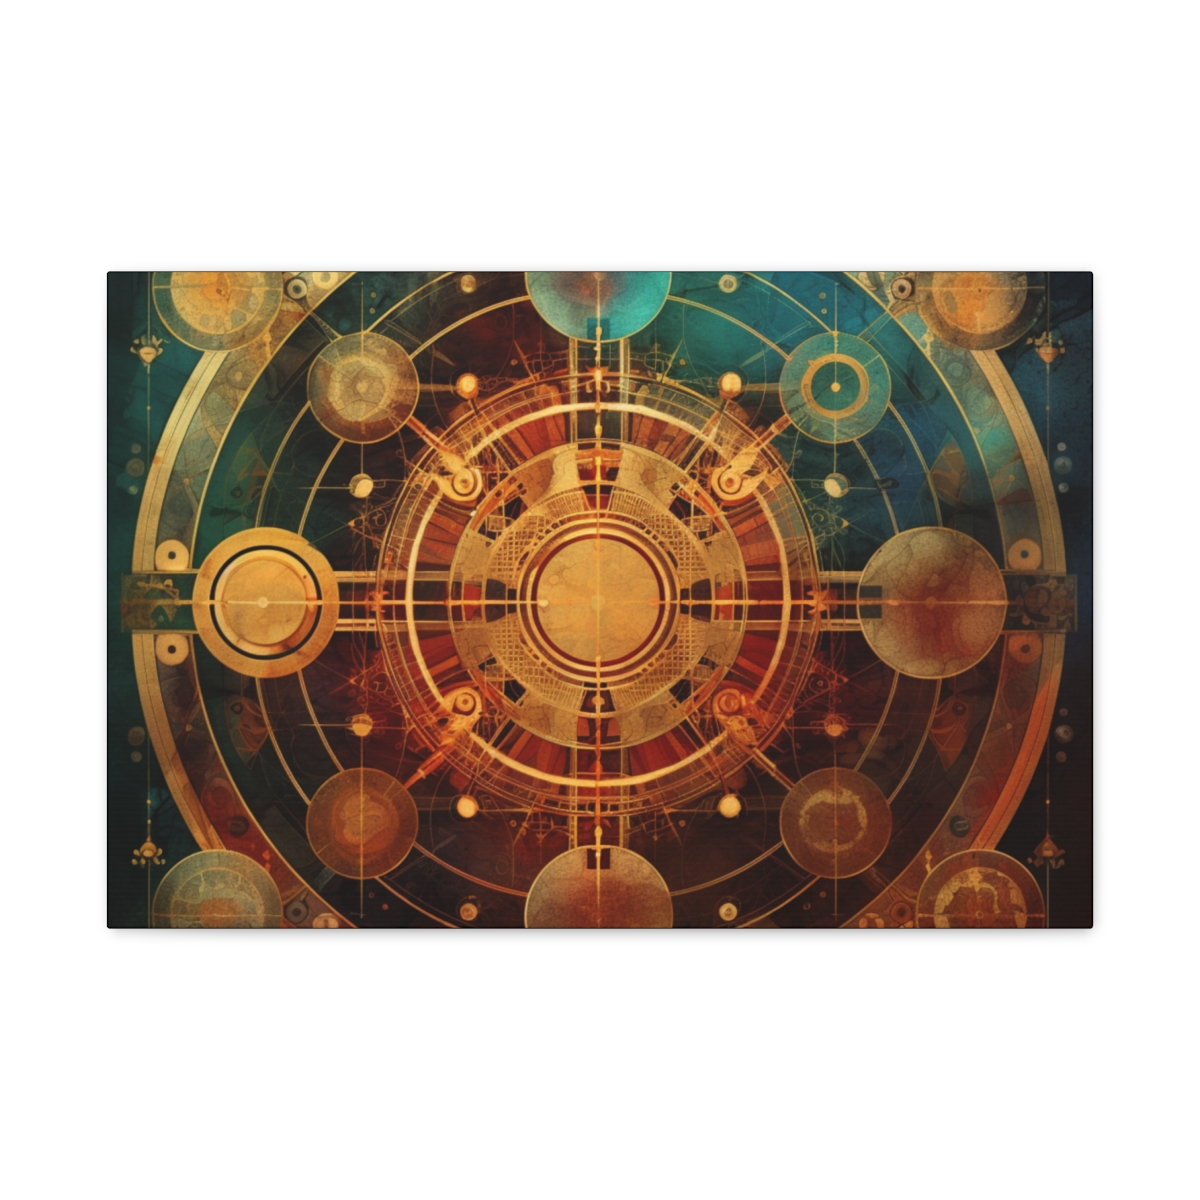 Astrology Art Print: The Blueprint of the Universe